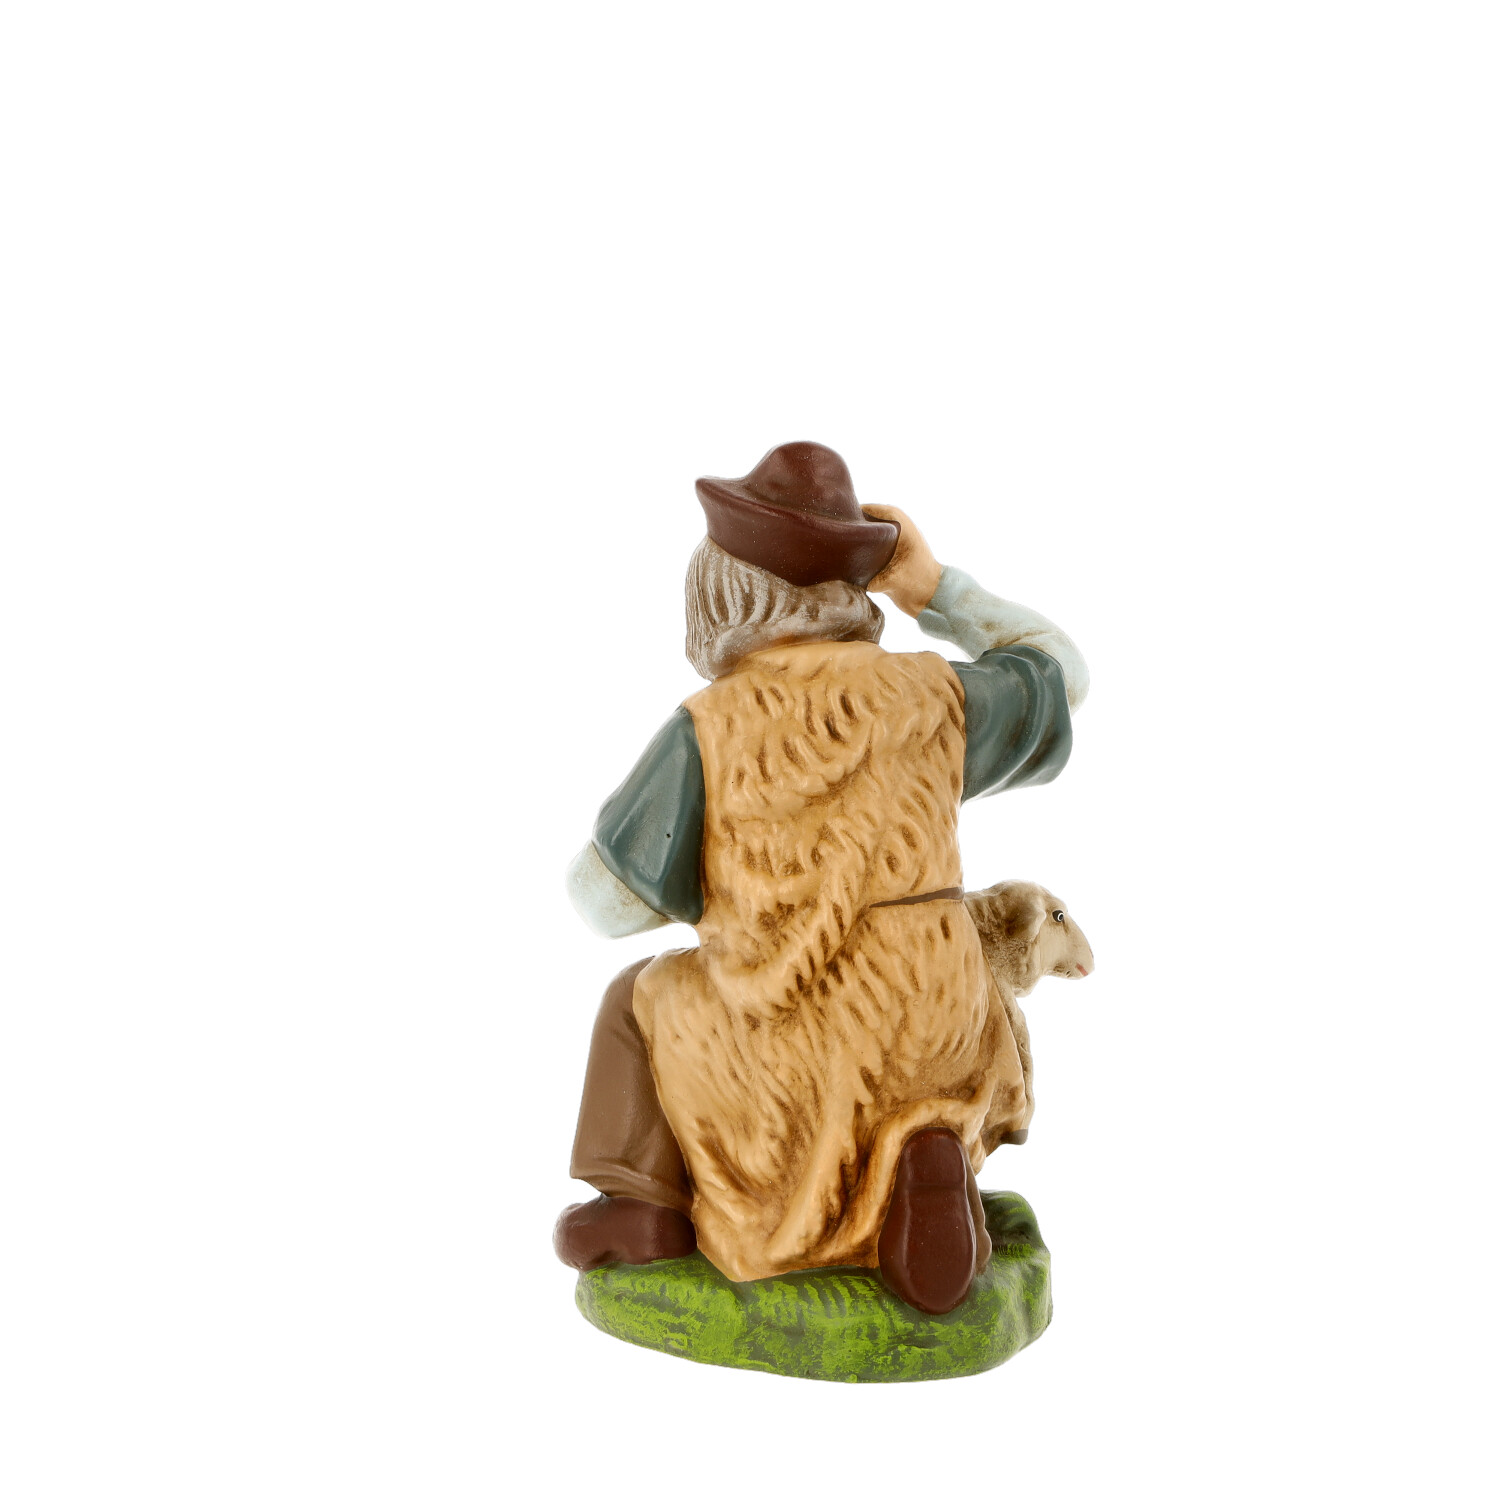 Kneeling shepherd with sheep - Marolin Nativity figure - made in Germany